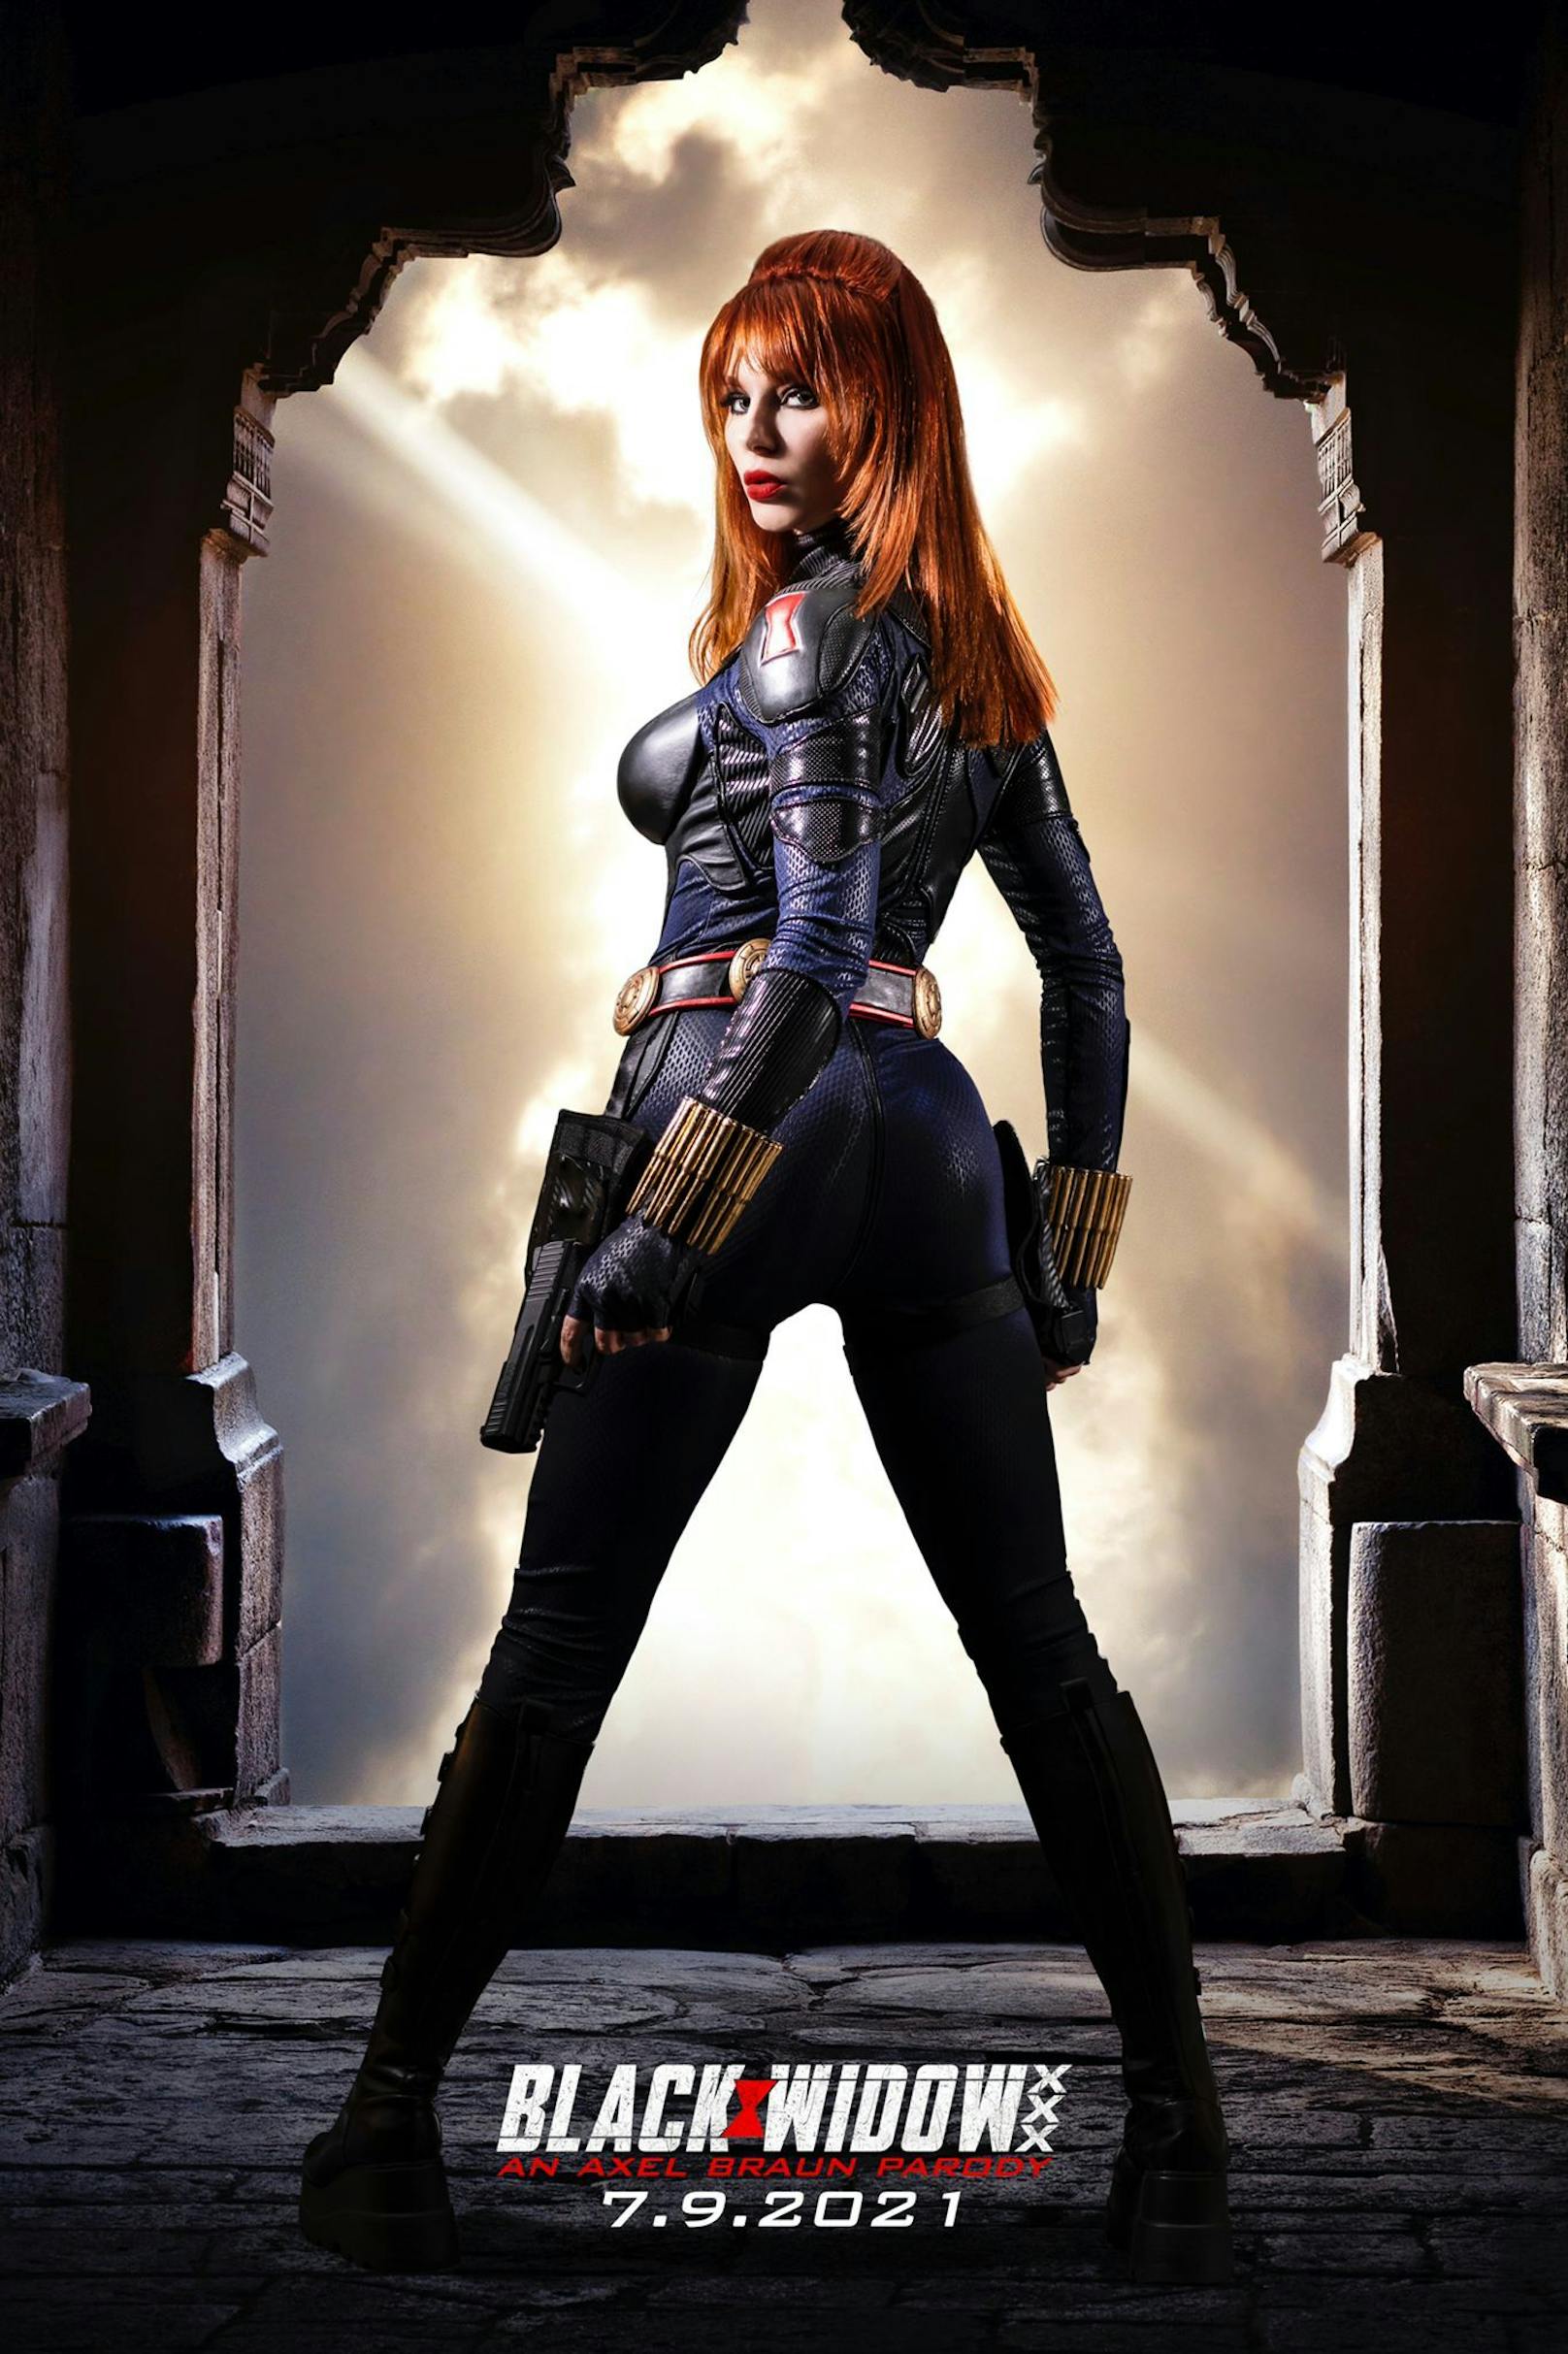 Porno-Starlet Lacy Lennon als "Natasha Romanoff" in “Black Widow XXX: An Axel Braun Parody."